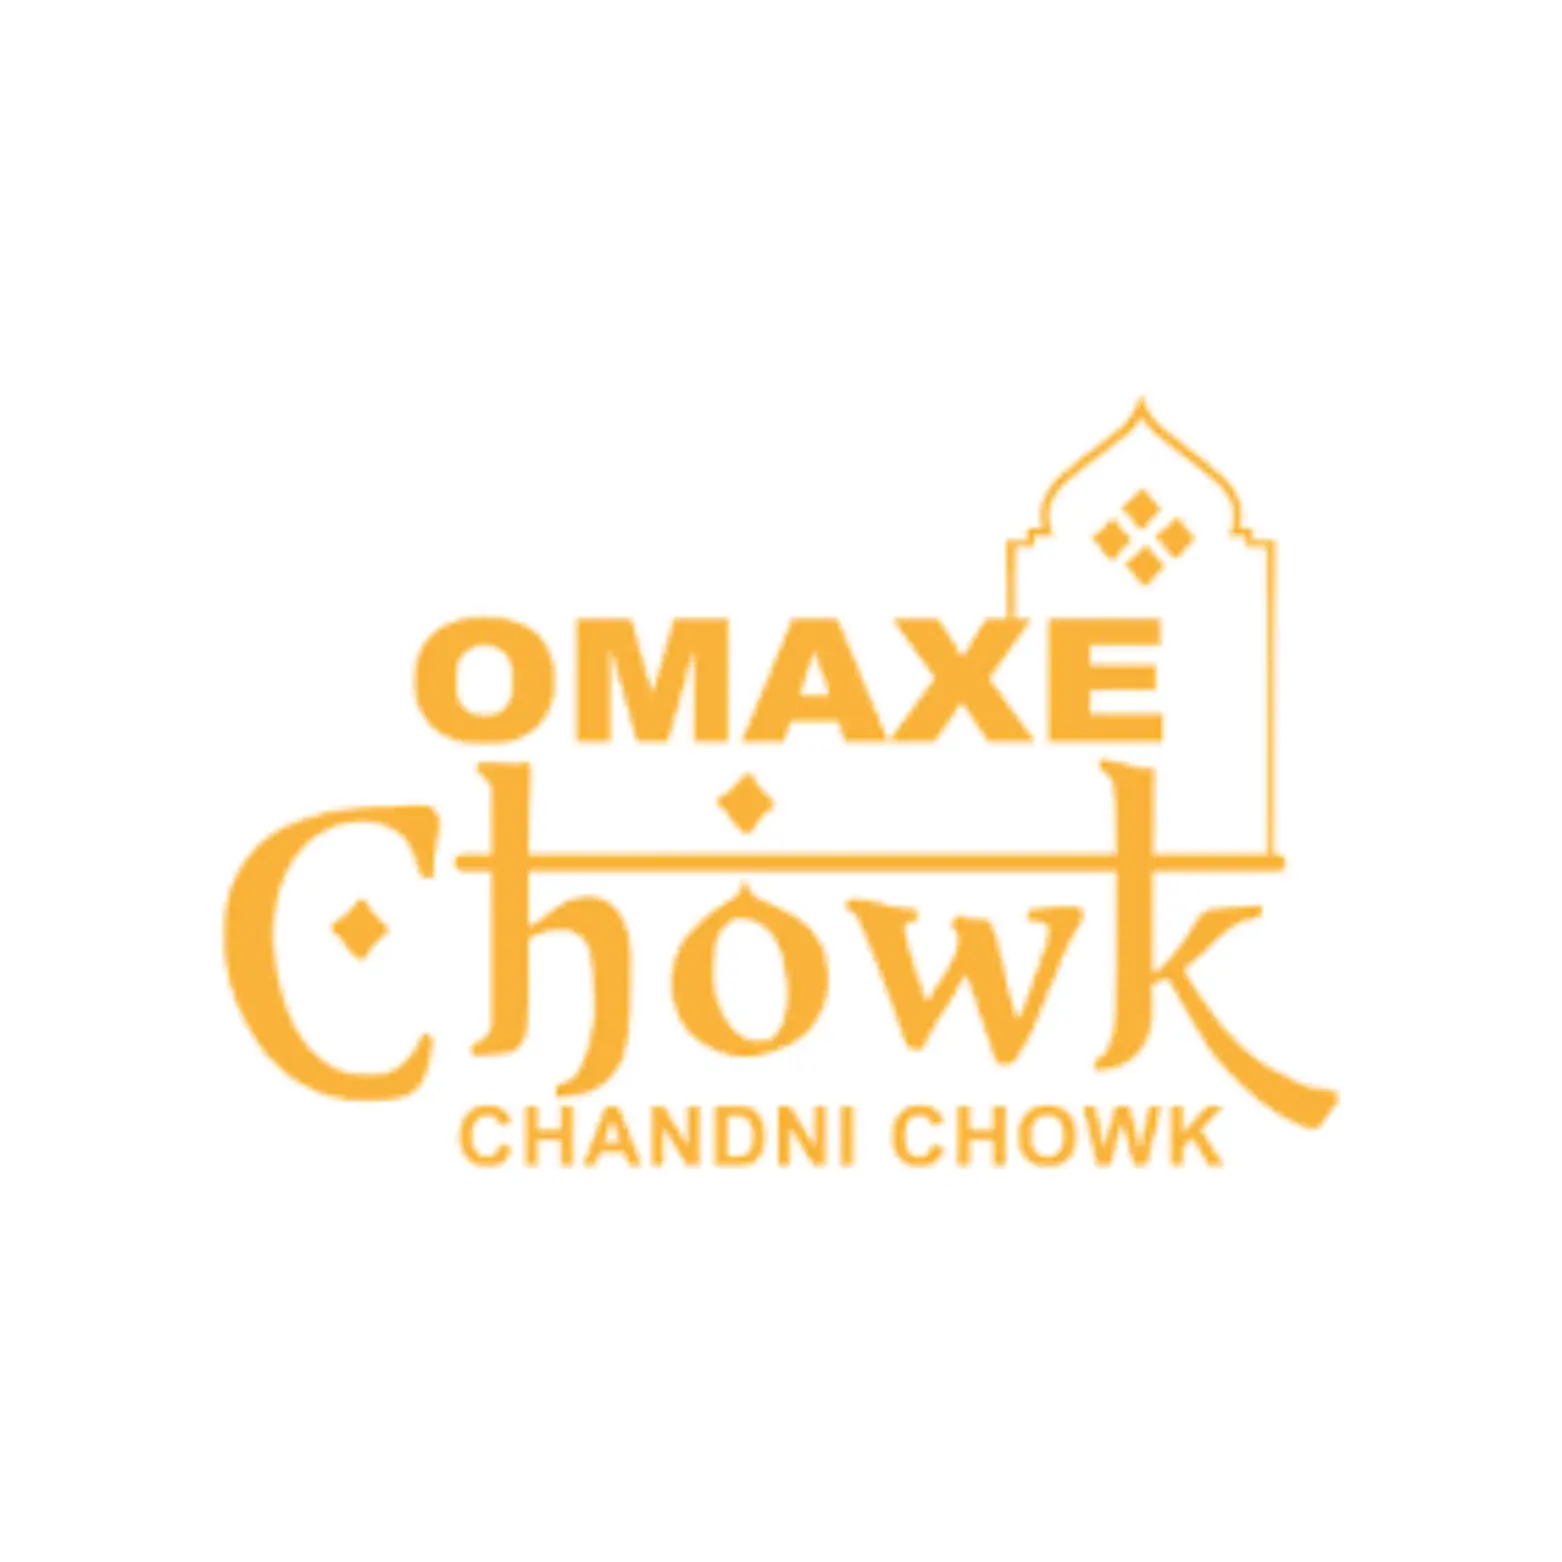 OMAXE Chowk